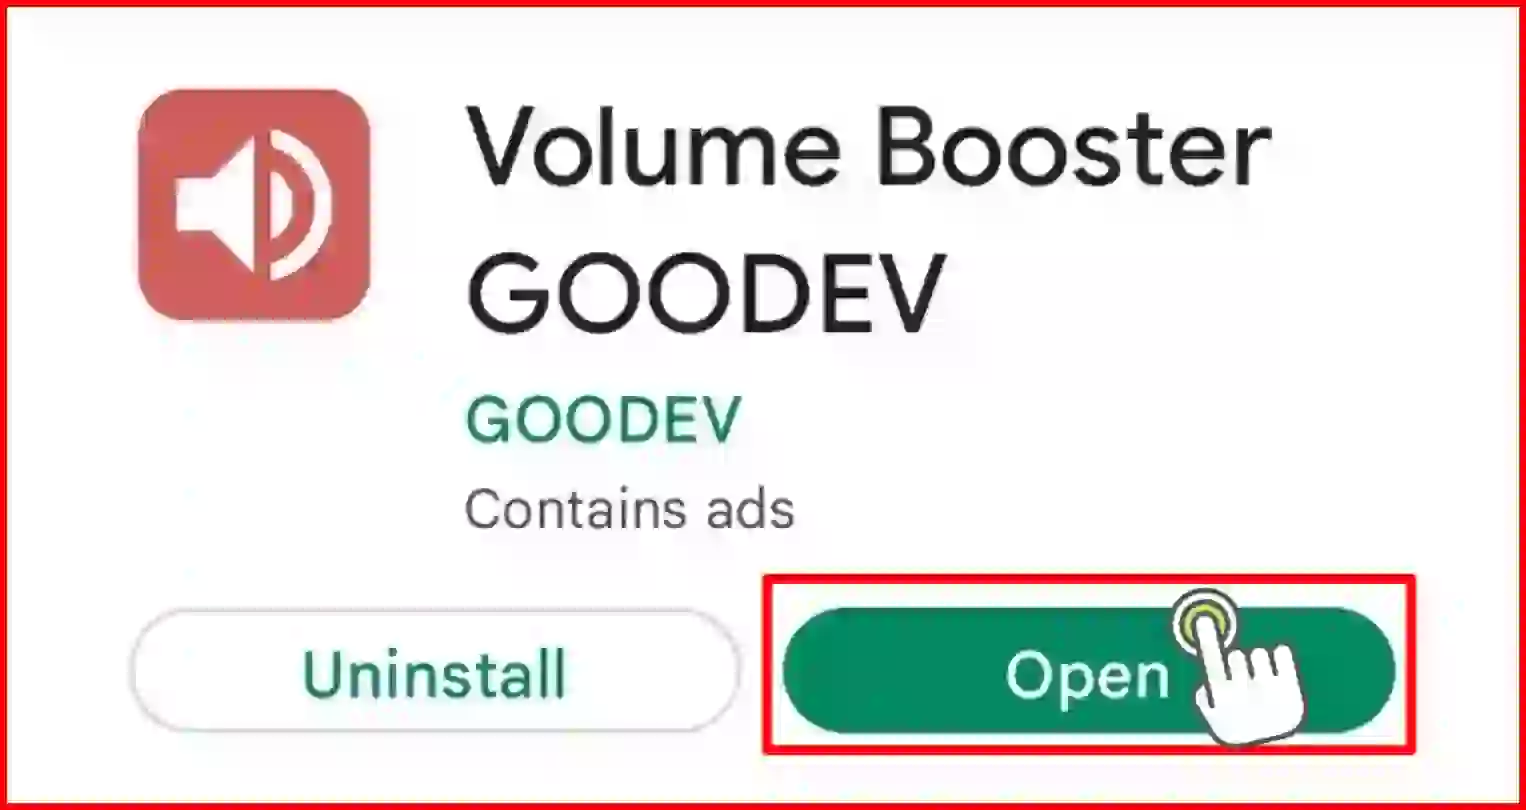 goodev-app-open